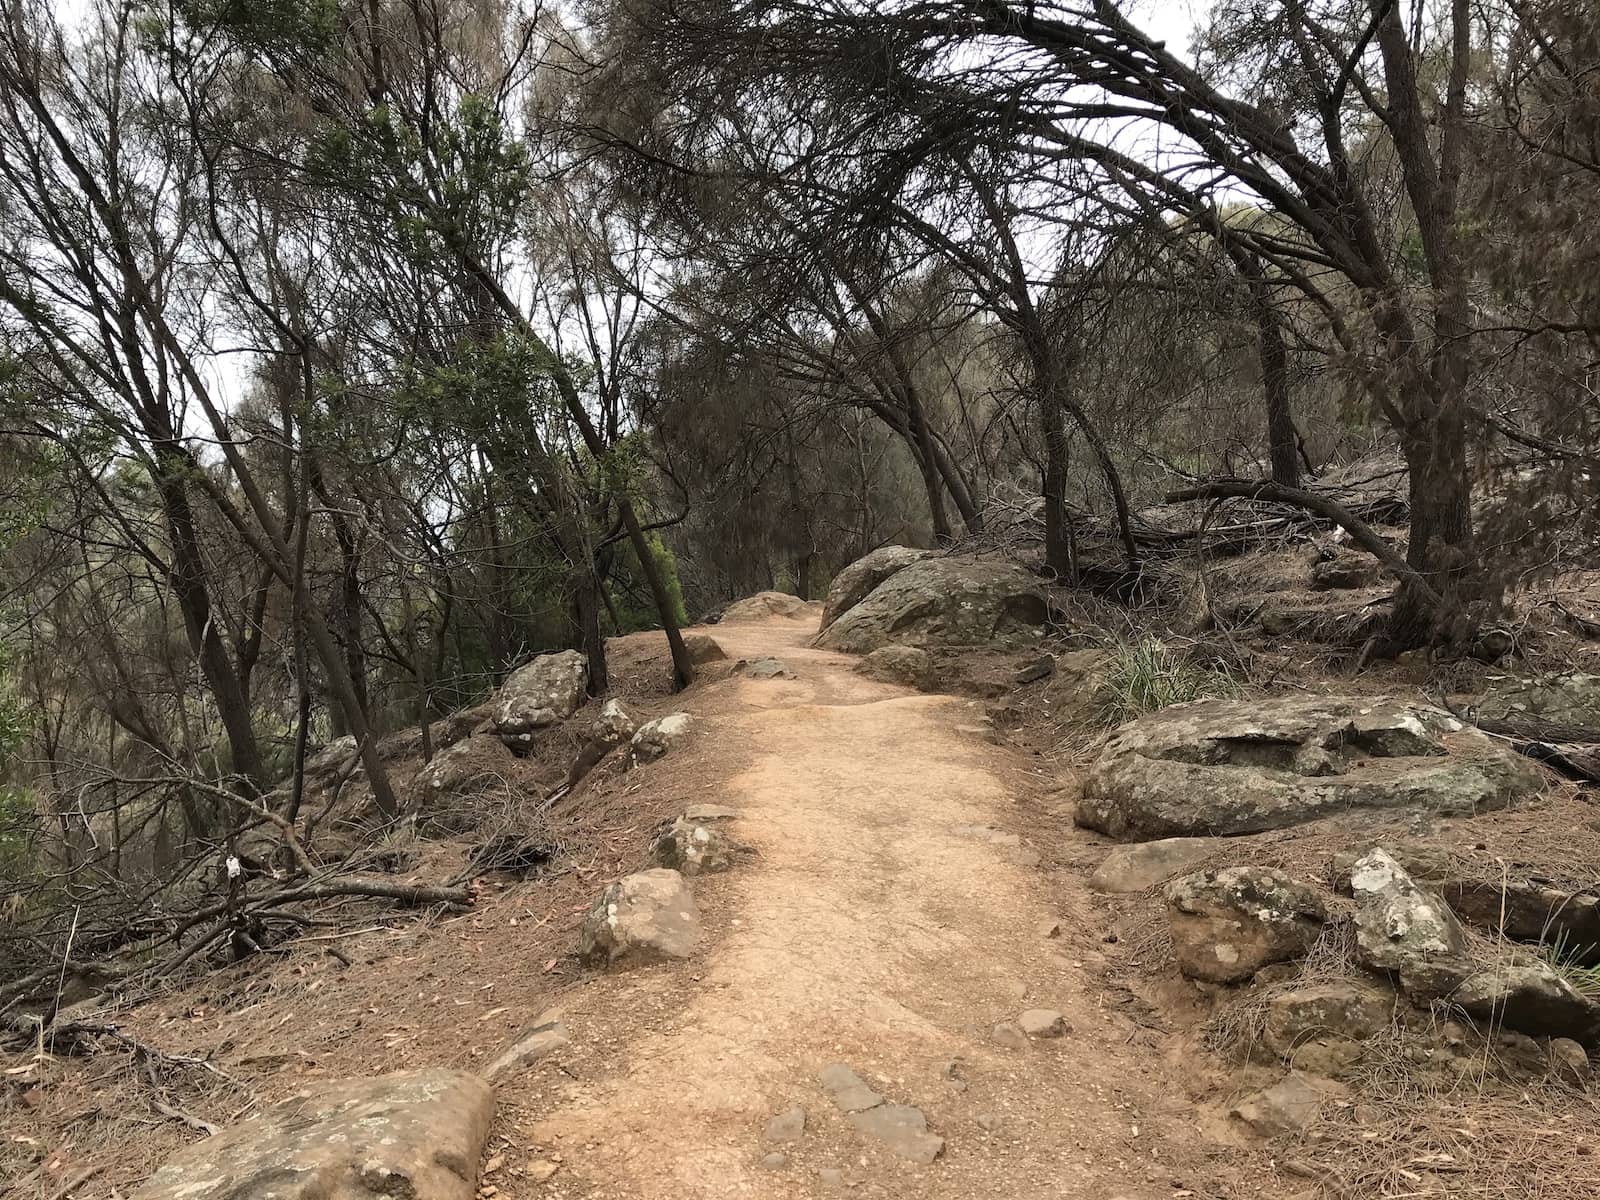 A rough dirt path, part of a hike